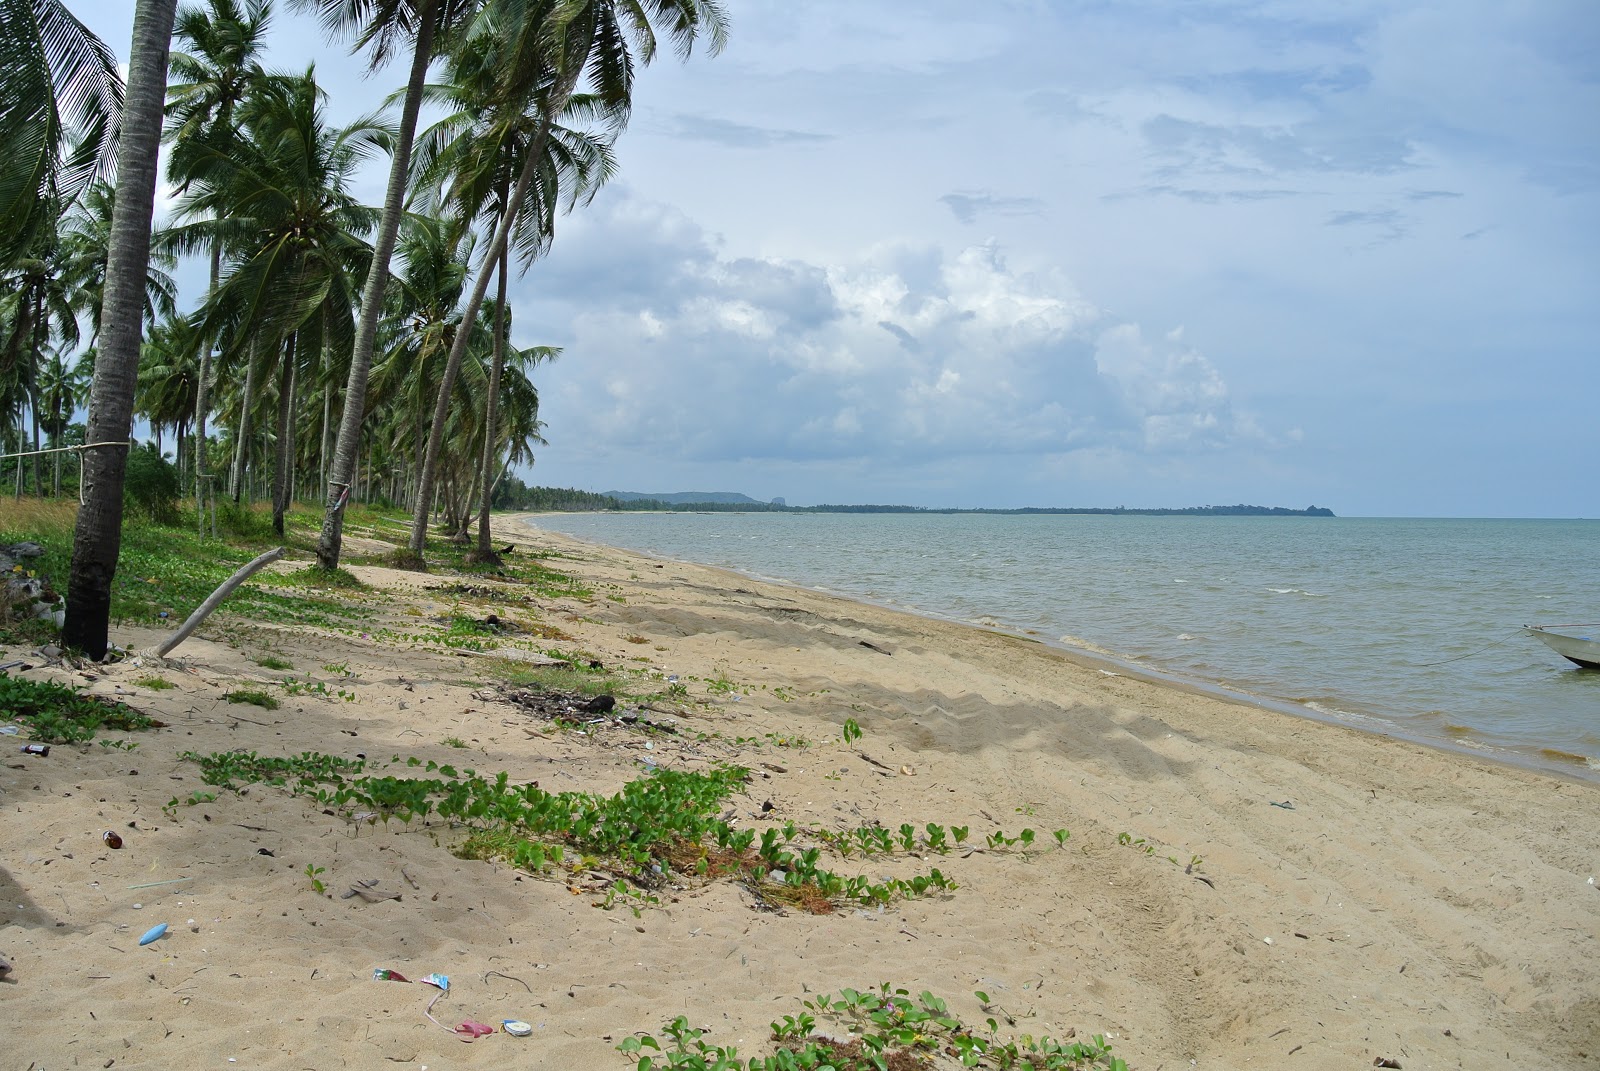 Foto de Tawanchai Beach ubicado en área natural